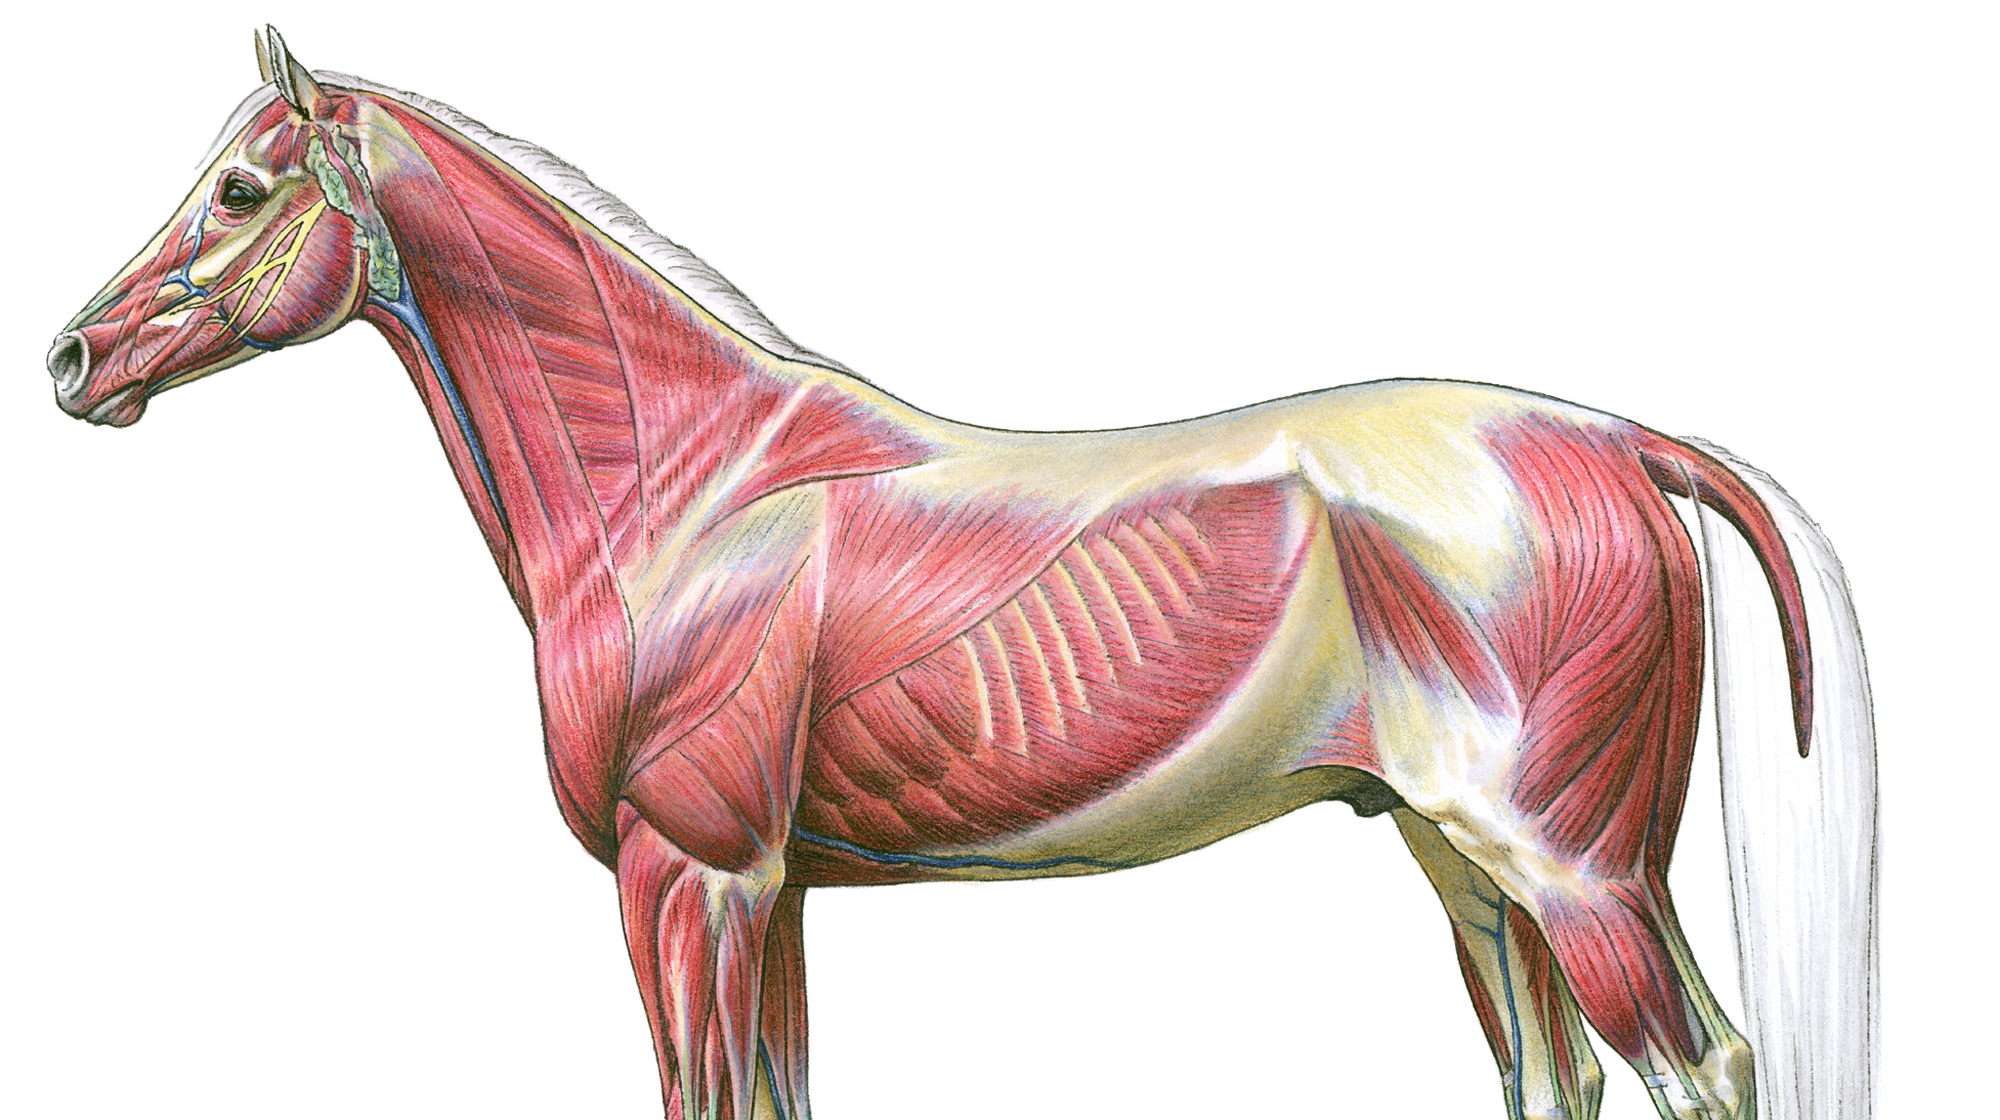 Equine Deep Musculature Anatomy Chart, 52% OFF